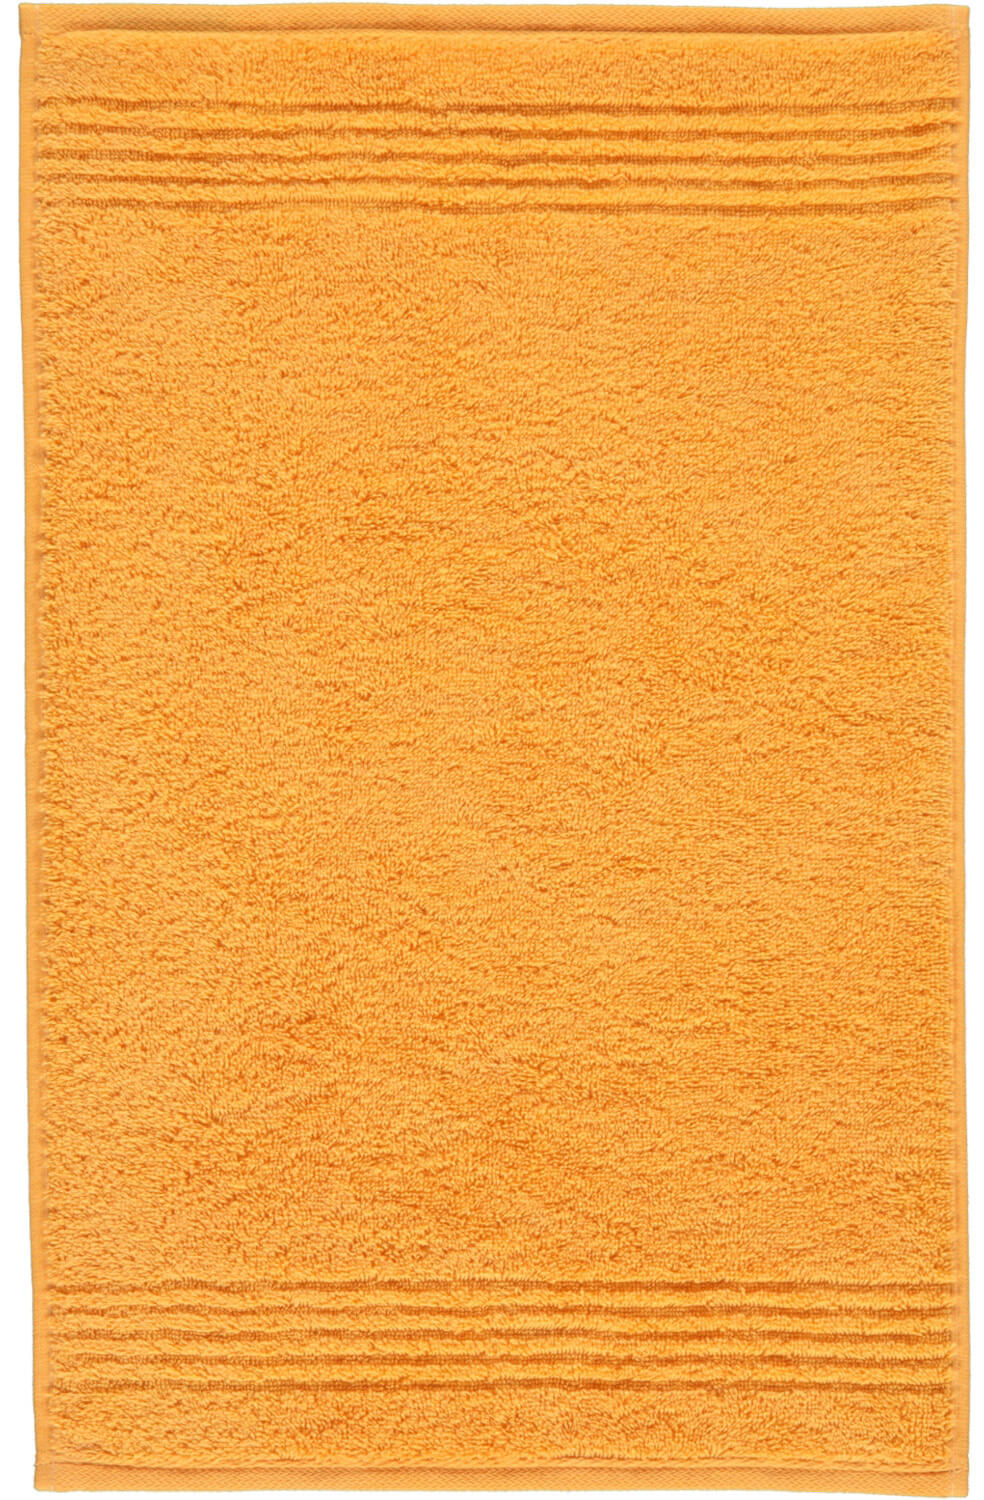 Полотенце абрикосового цвета Essential Apricot ☞ Размер: 30 x 50 см